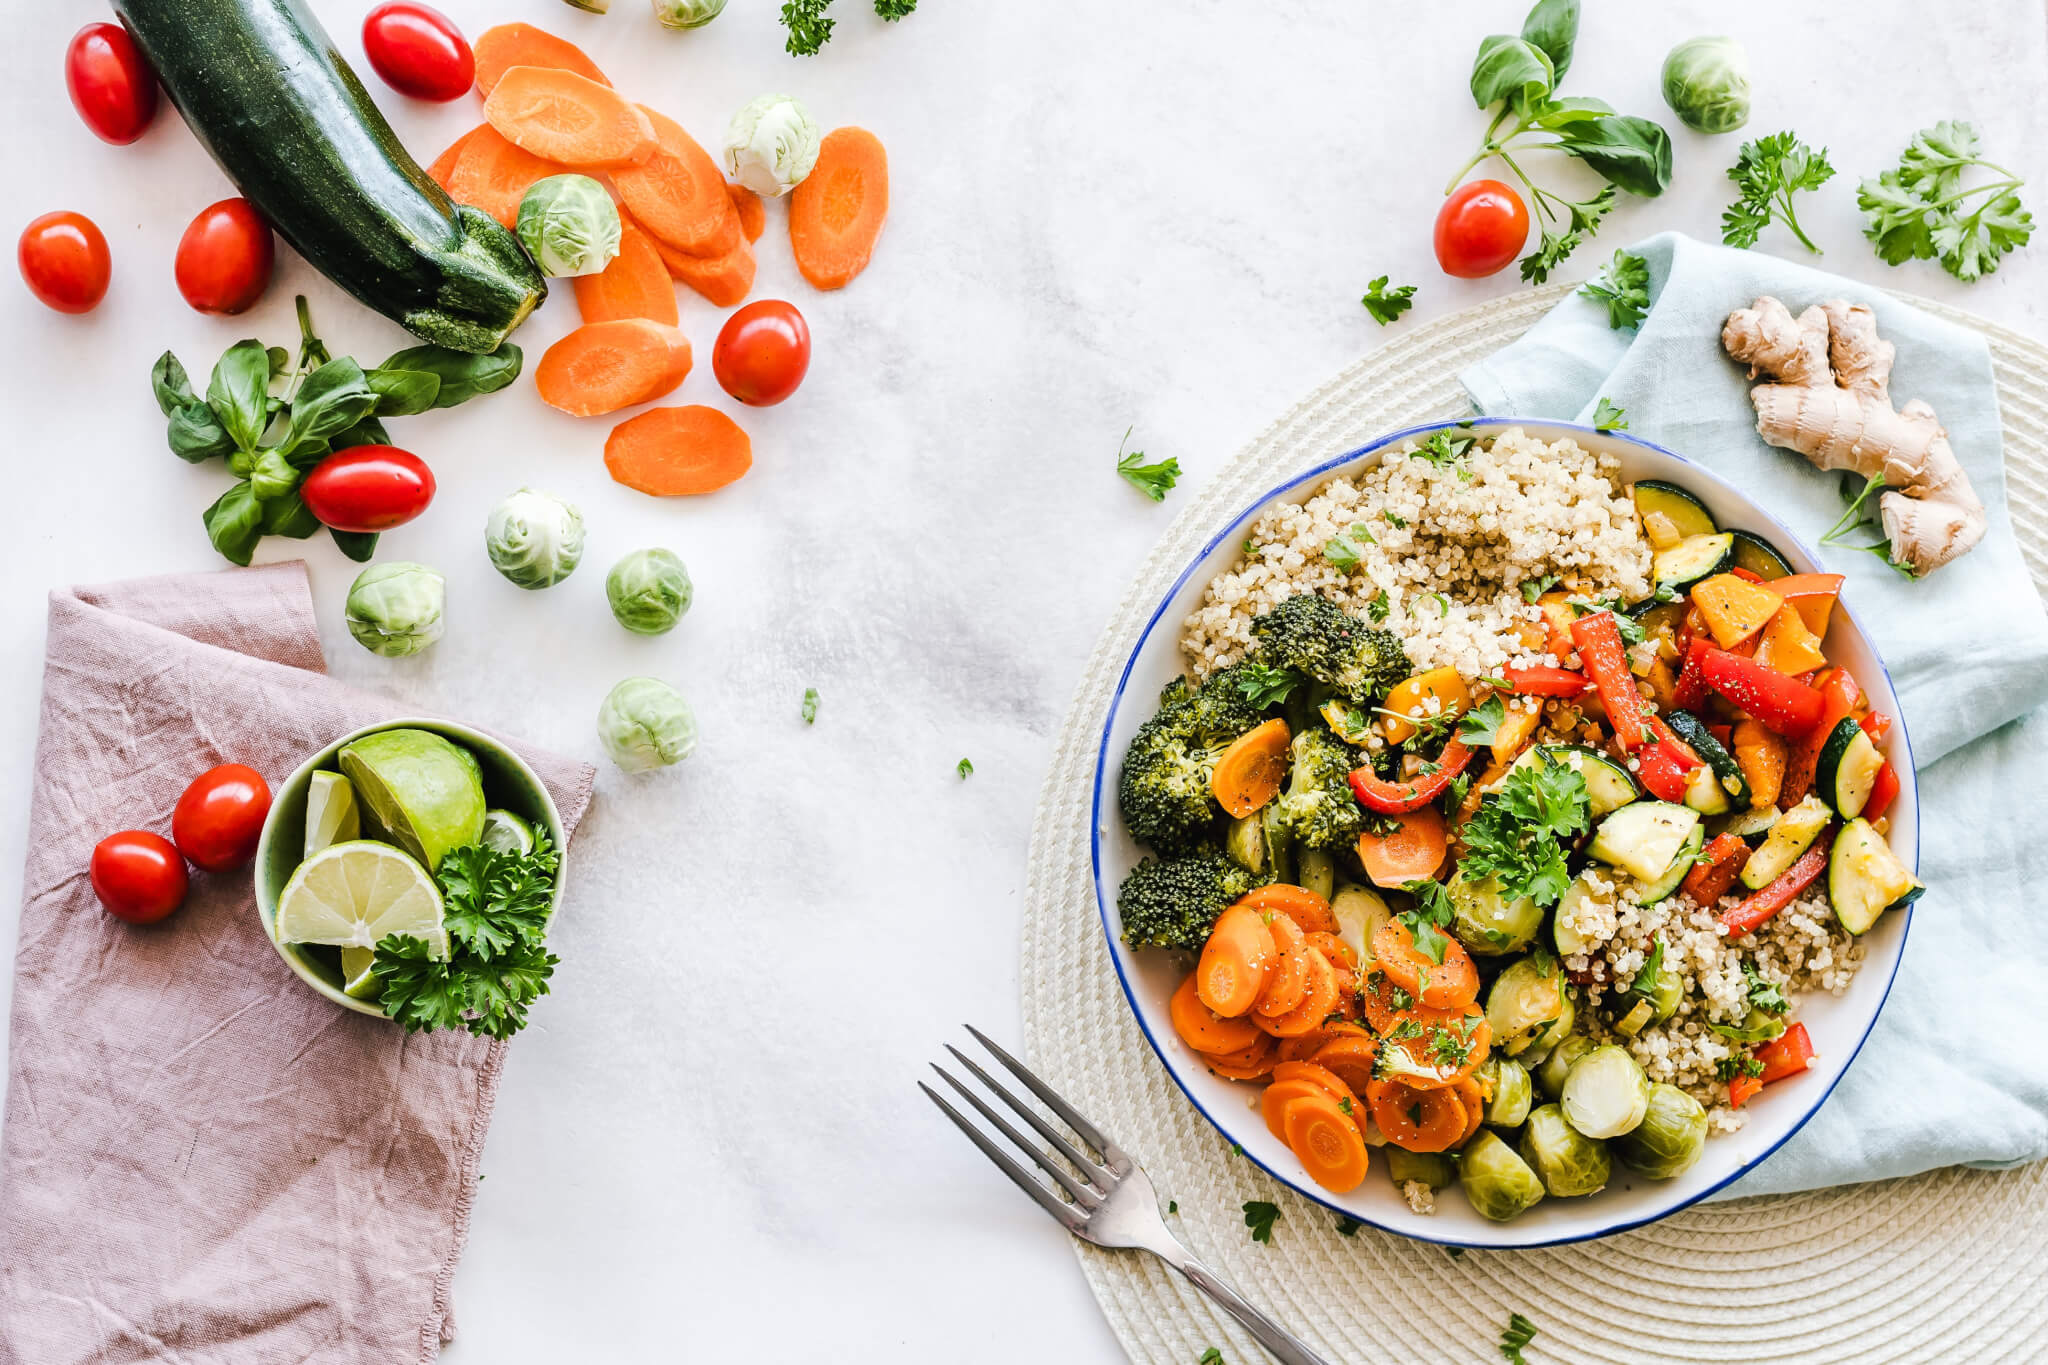 Healthy diet, vegetables, salad